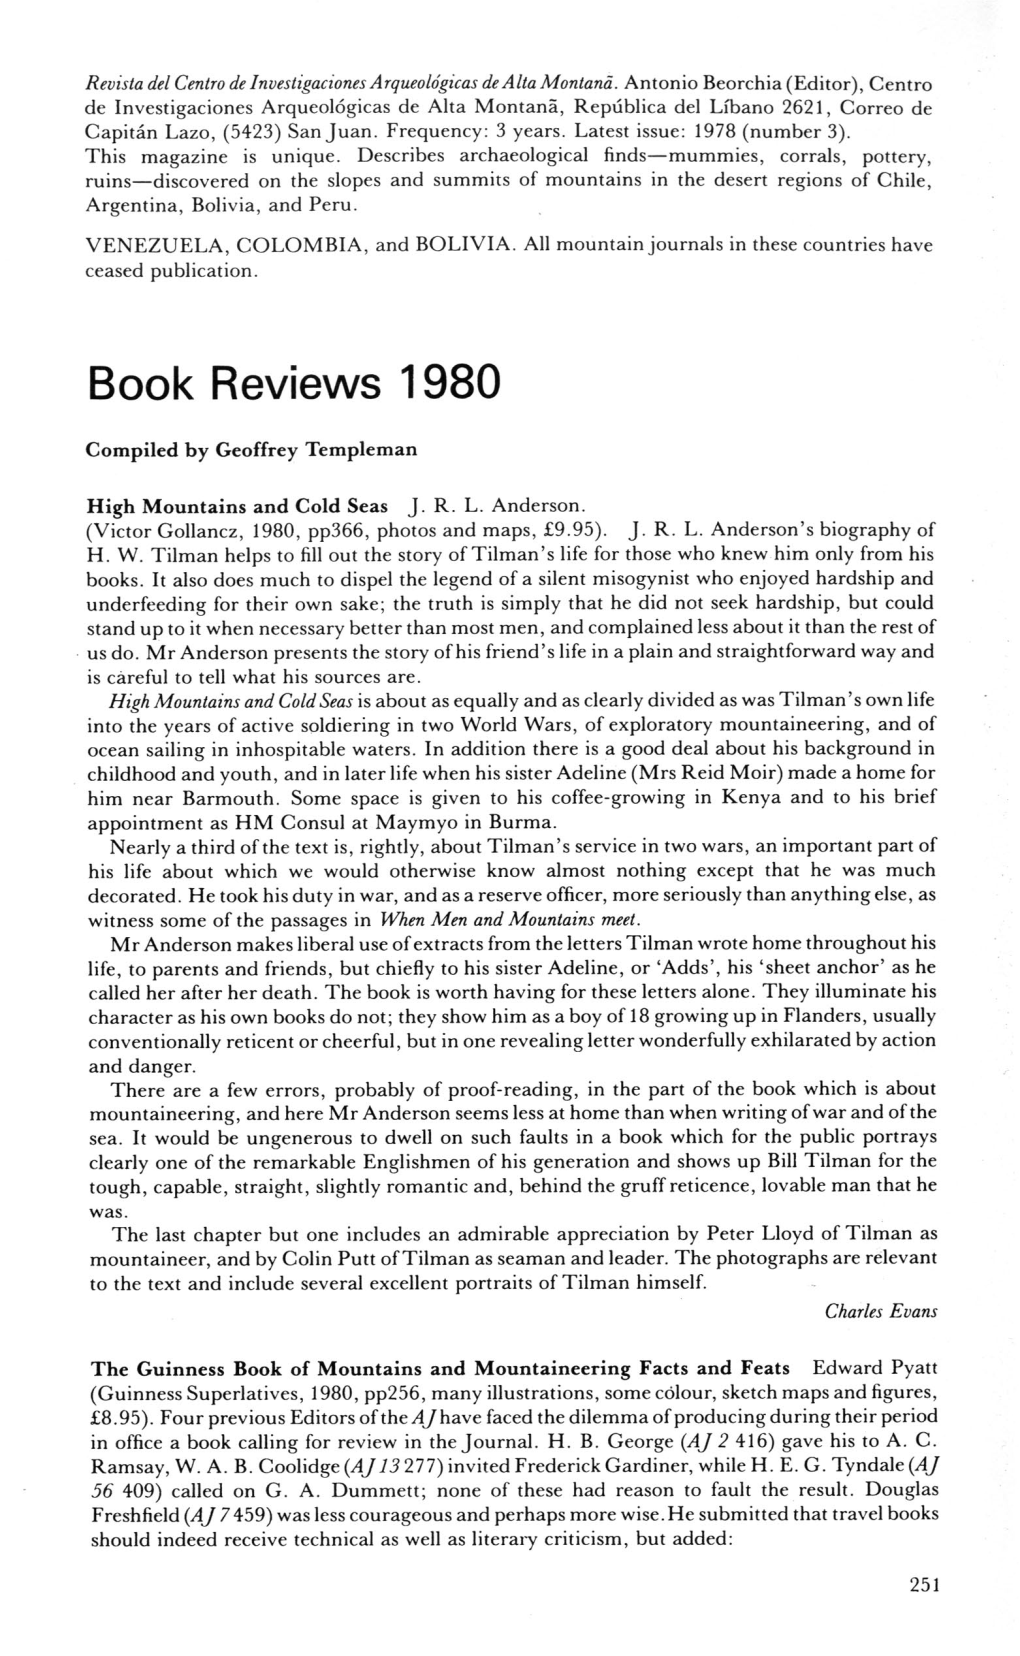 Book Reviews 1980